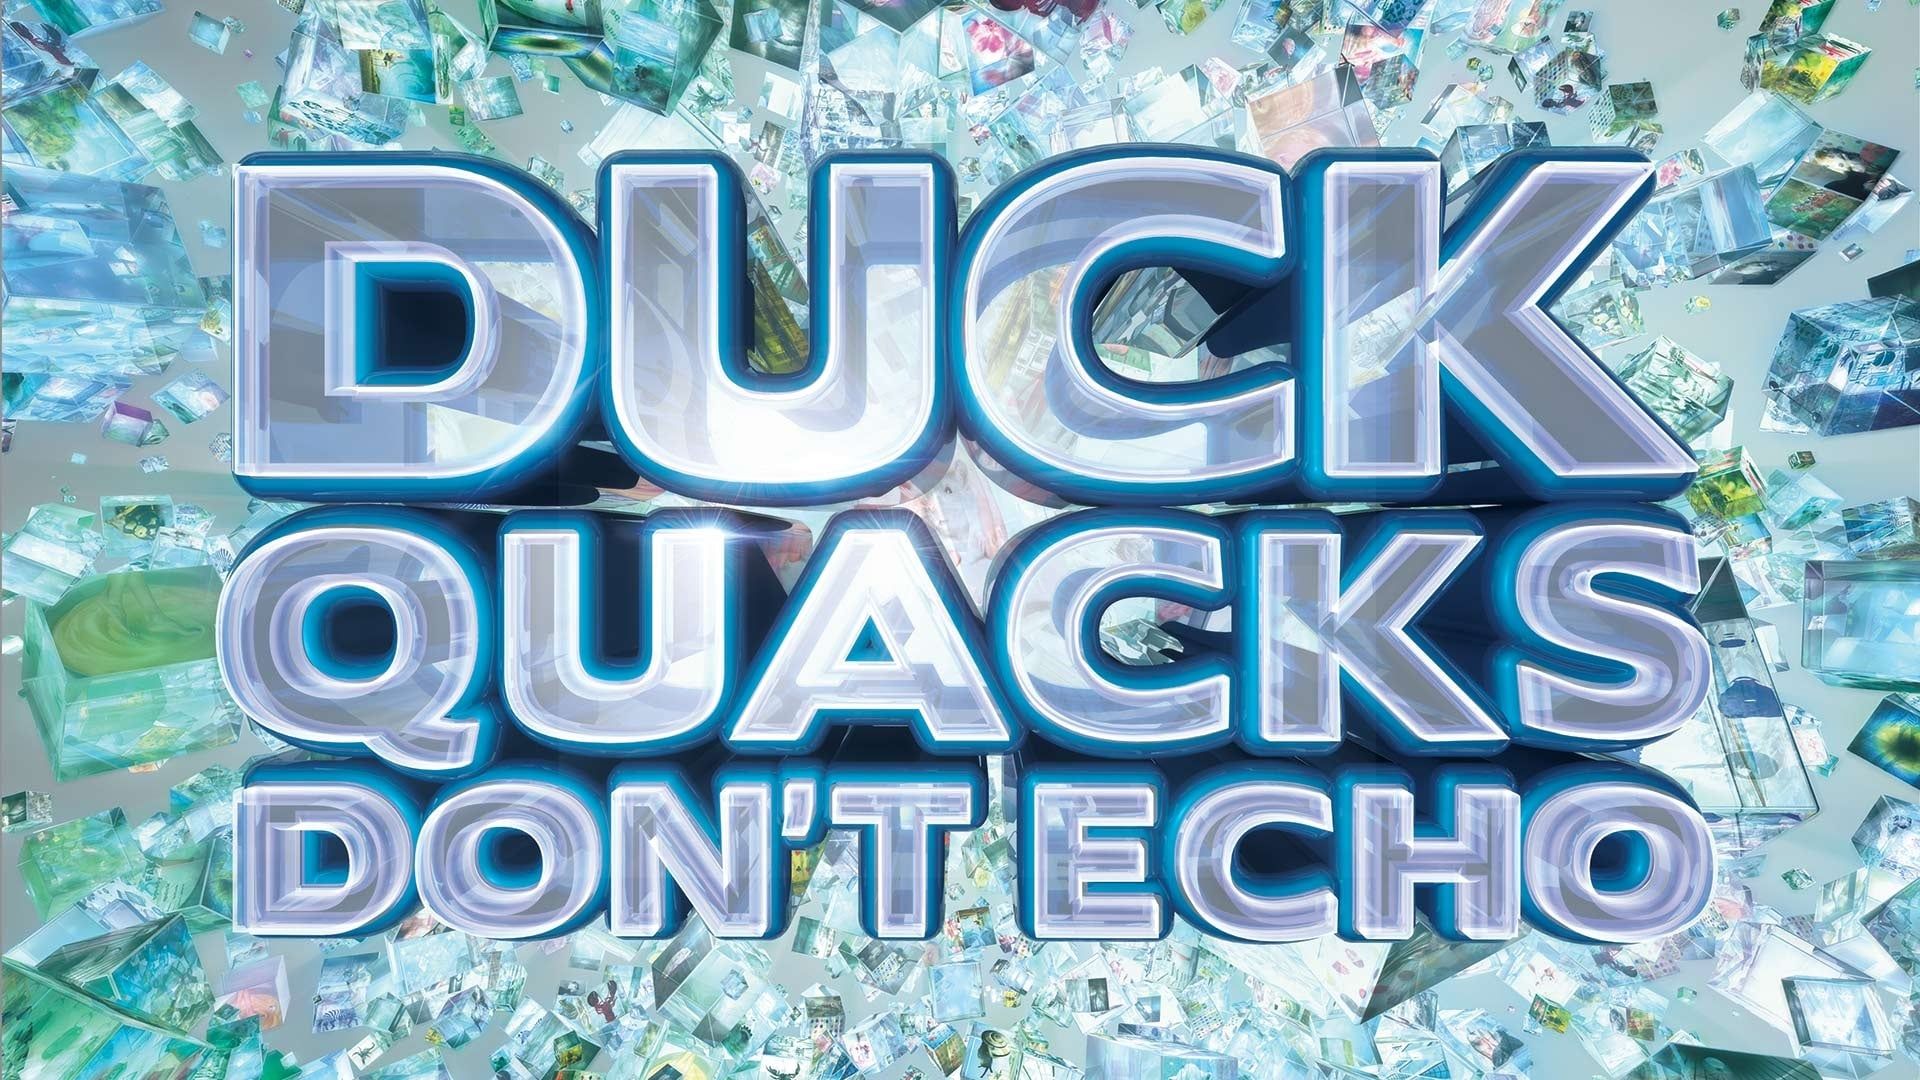 Duck Quacks Don't Echo background